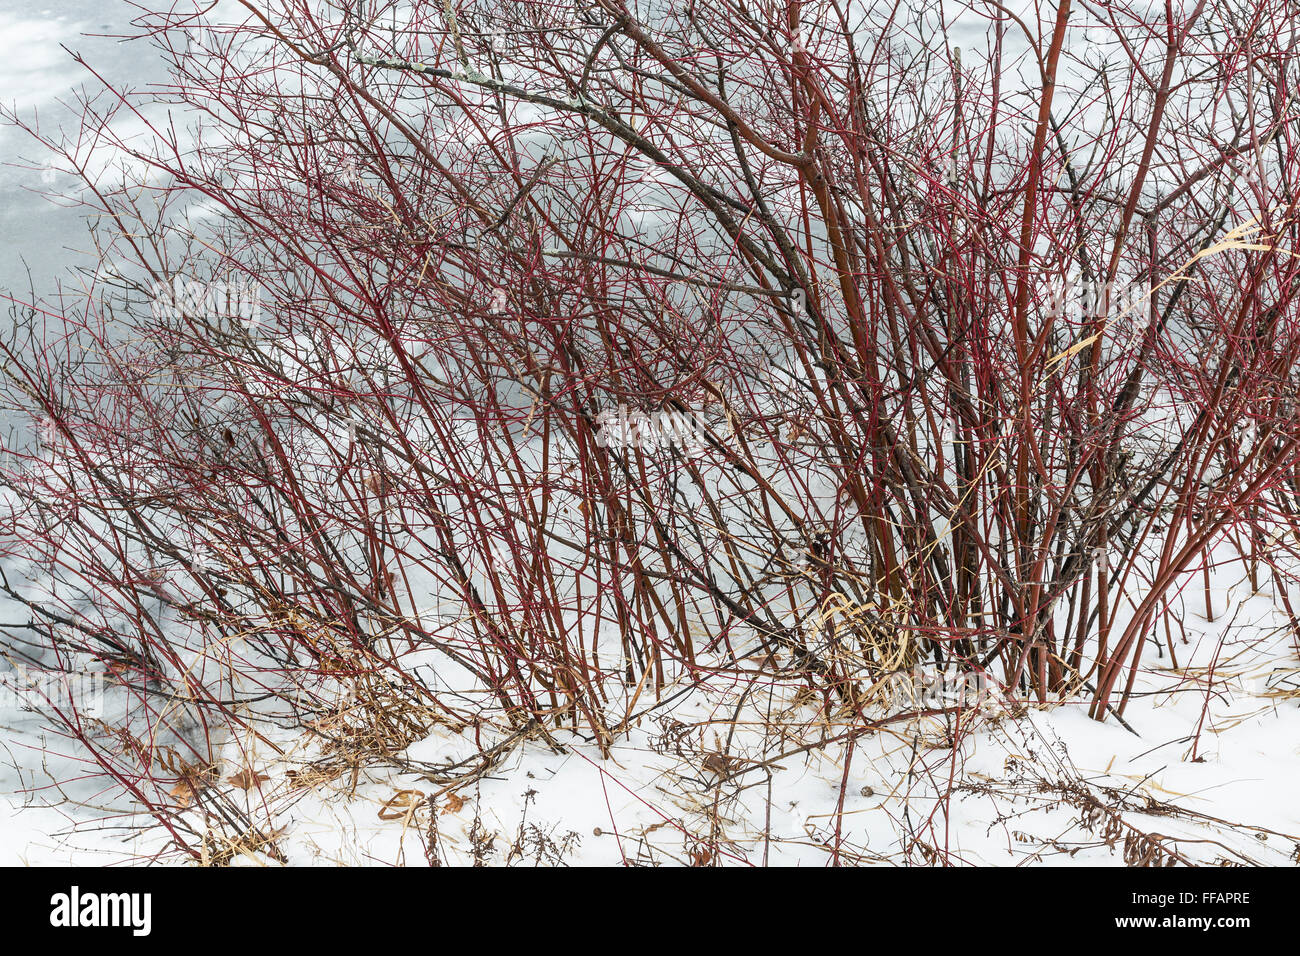 Red Osier Dogwood, Cornus sericia or Cornus stolonifera, in winter at Canadian Lakes near Stanwood, Michigan, USA Stock Photo